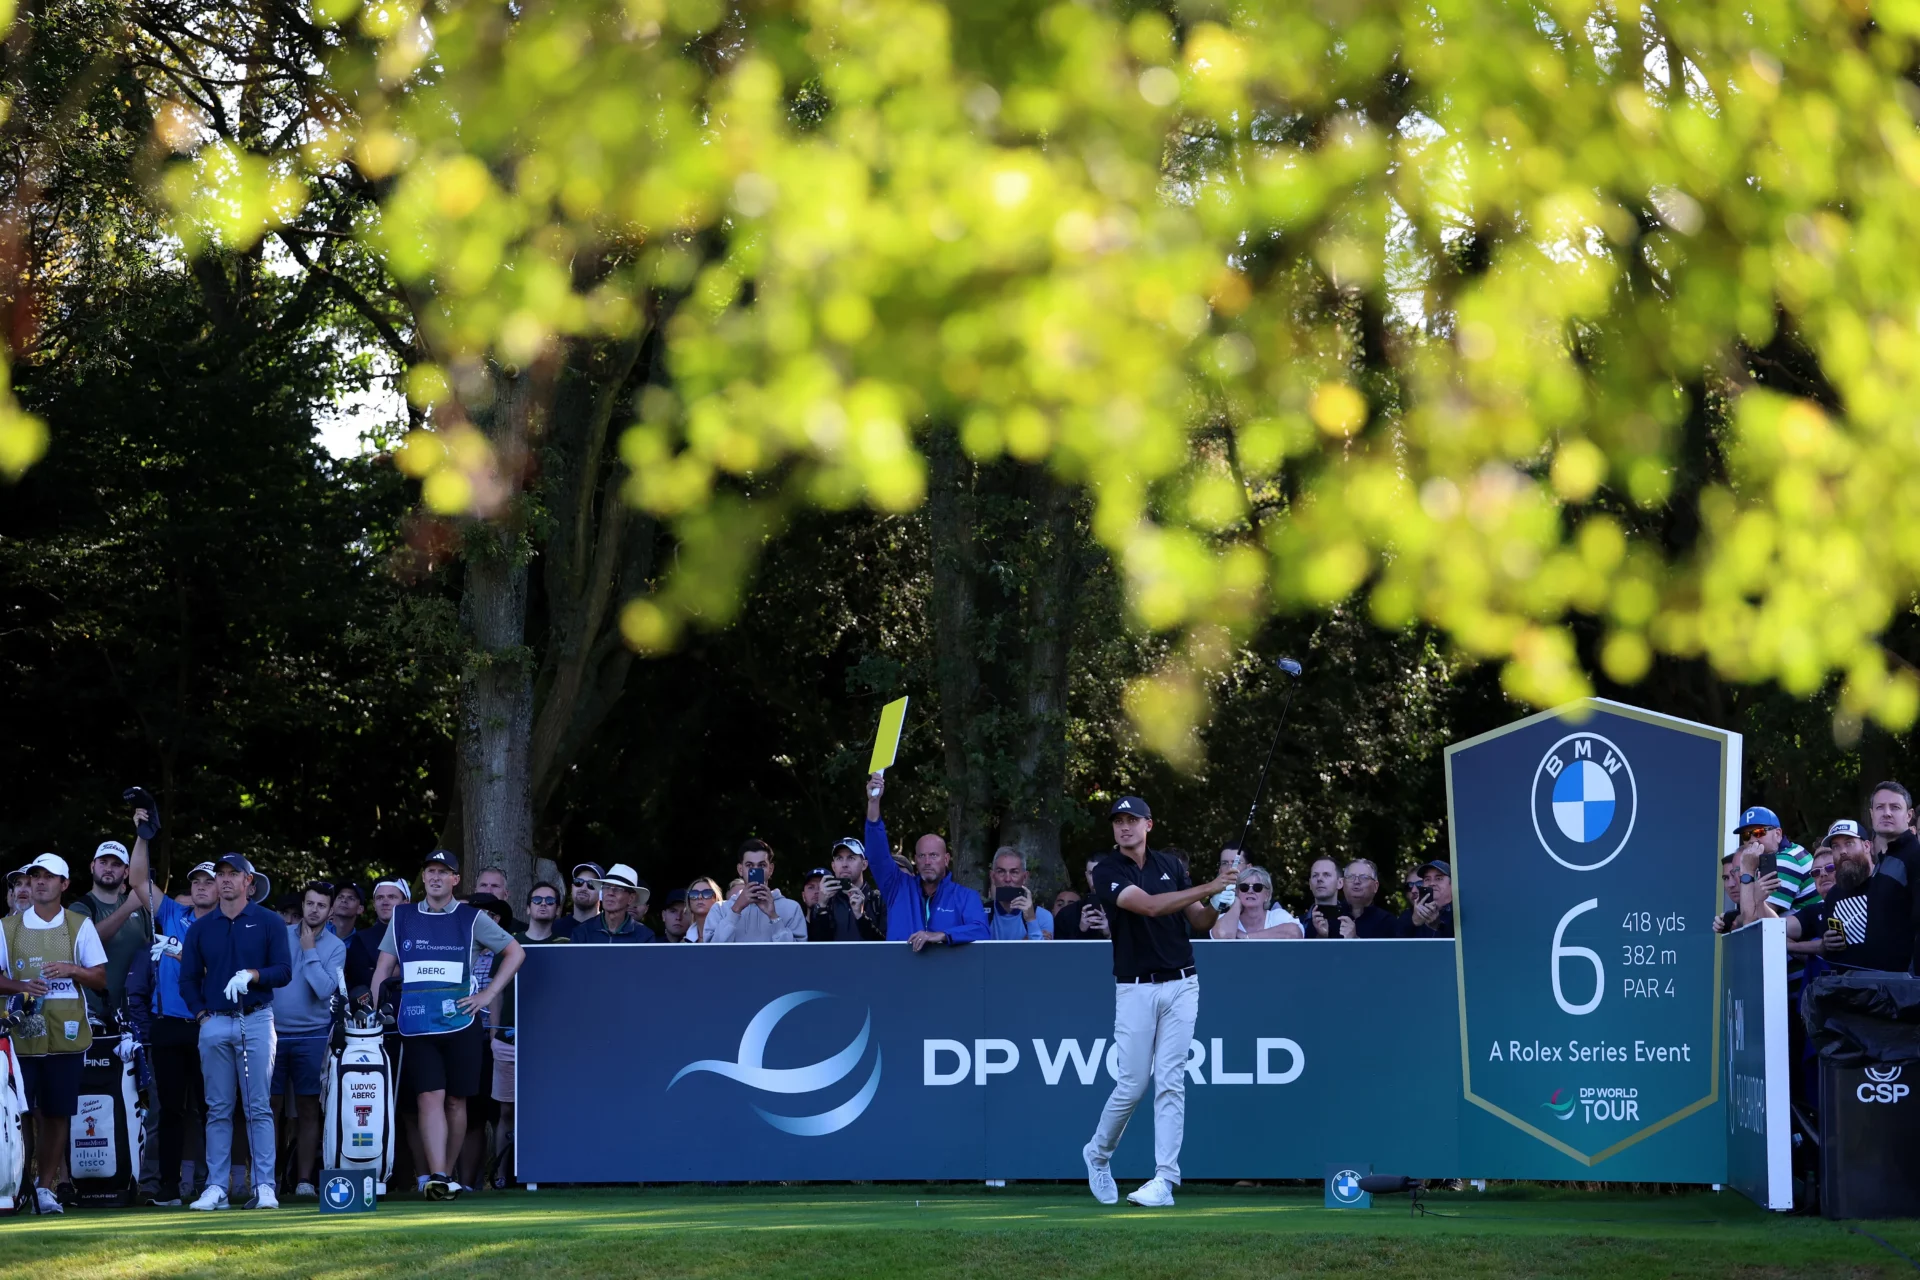 BMW PGA Championship: Ryan Fox (NZL) gewinnt trotz Triplebogey